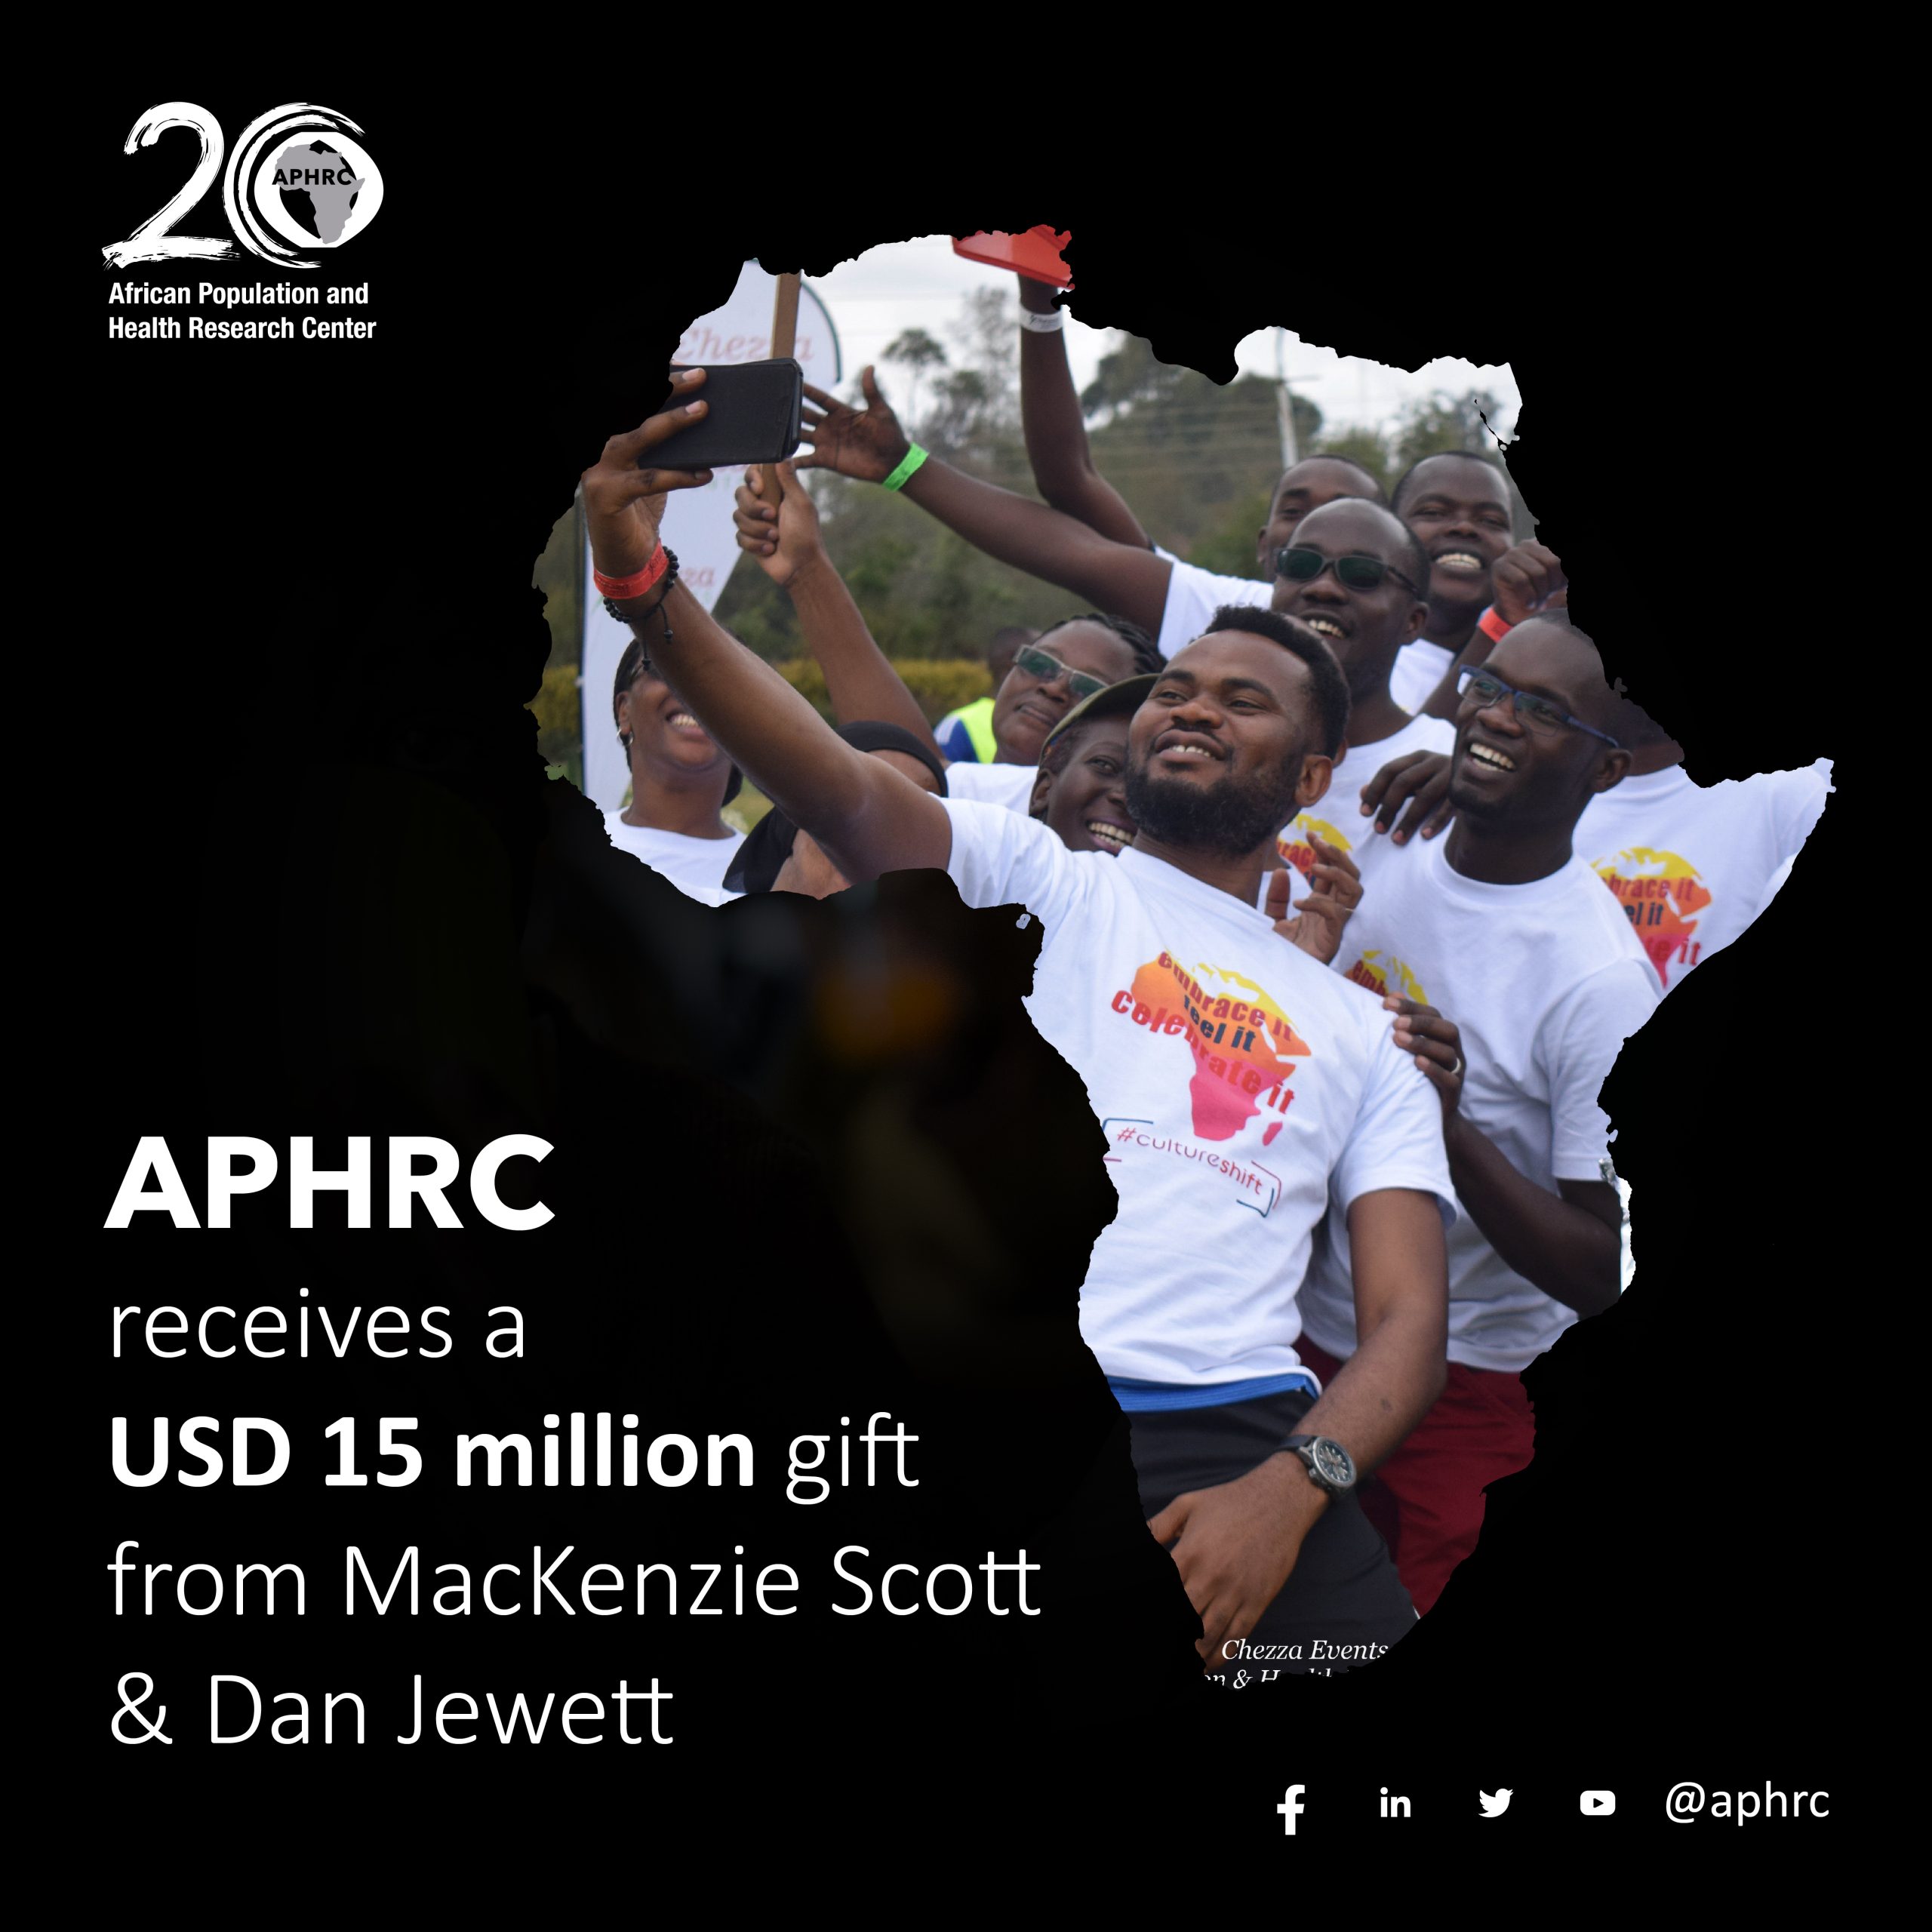 APHRC Received a $15 million gift from MacKenzie Scott and Dan Jewett